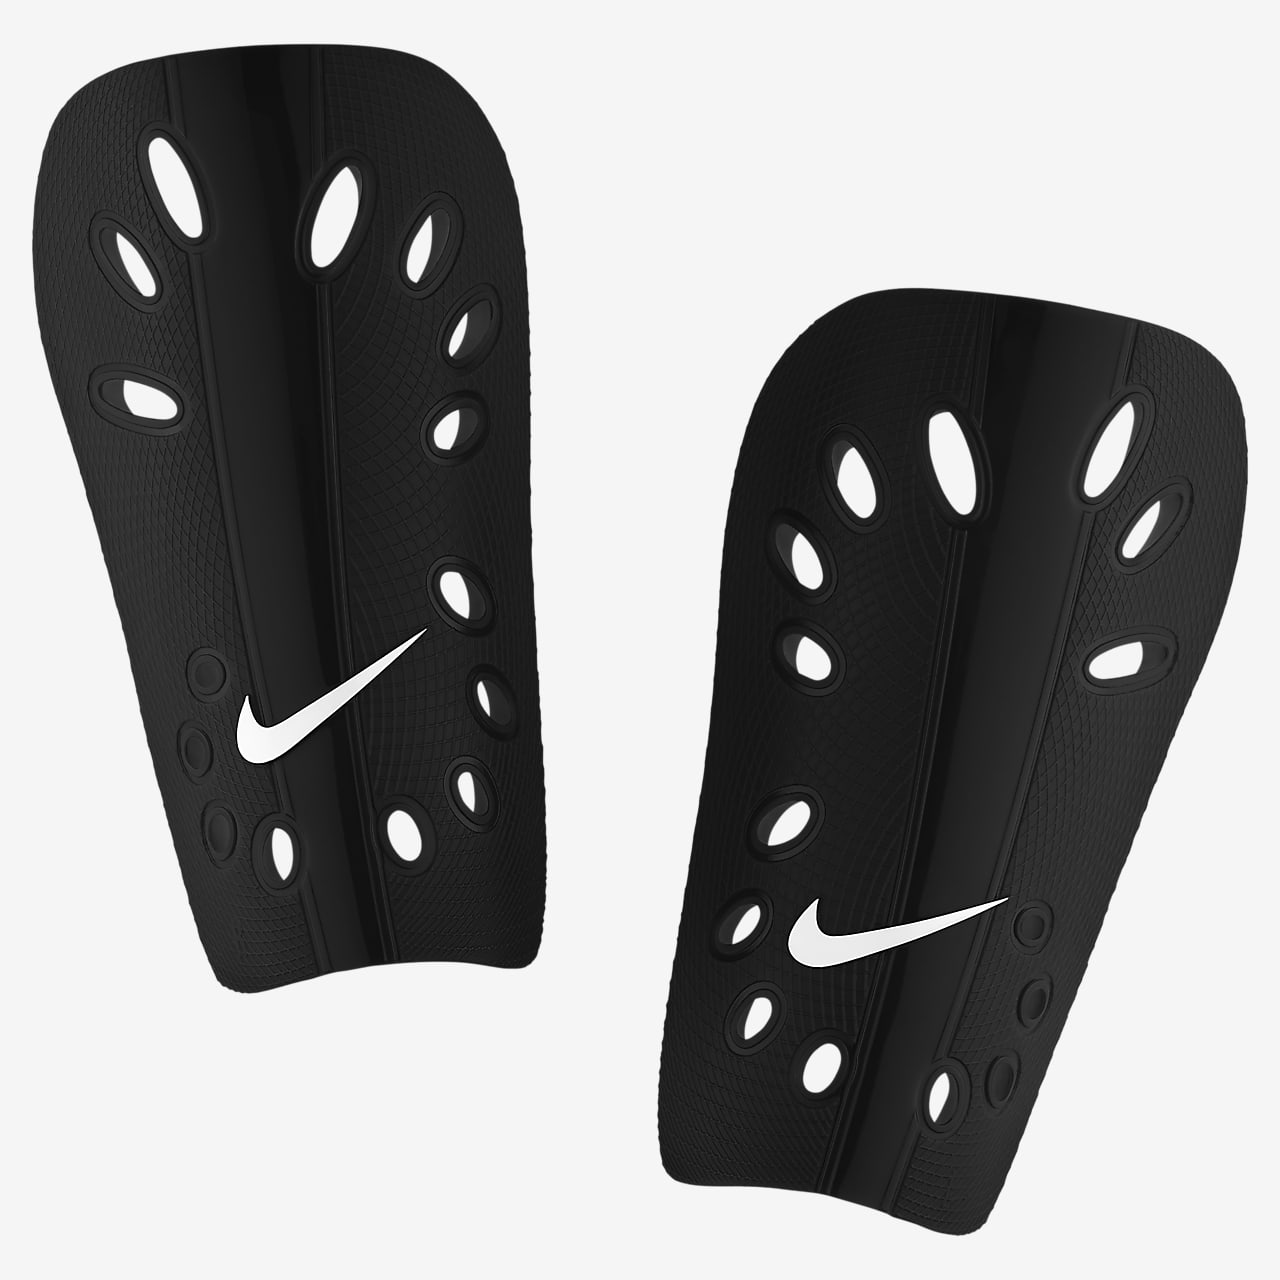 Actualizar montar deseable Nike J Soccer Shin Guards. Nike.com